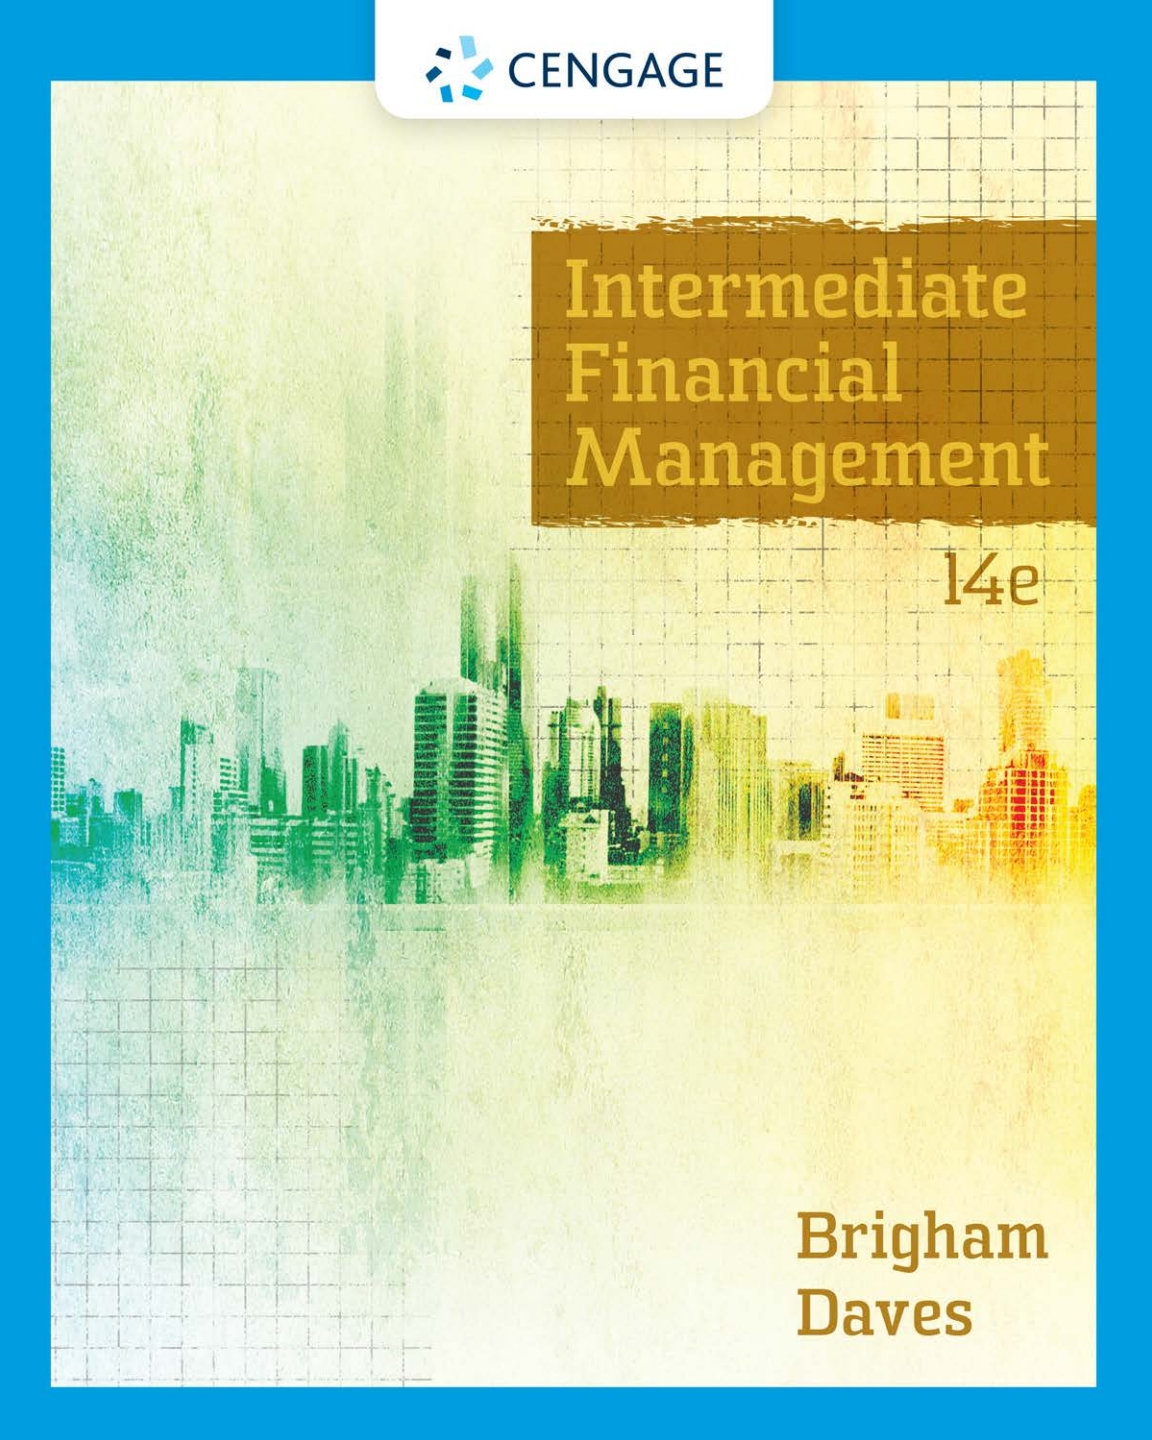 Intermediate Financial Management (14th Edition) - eBook